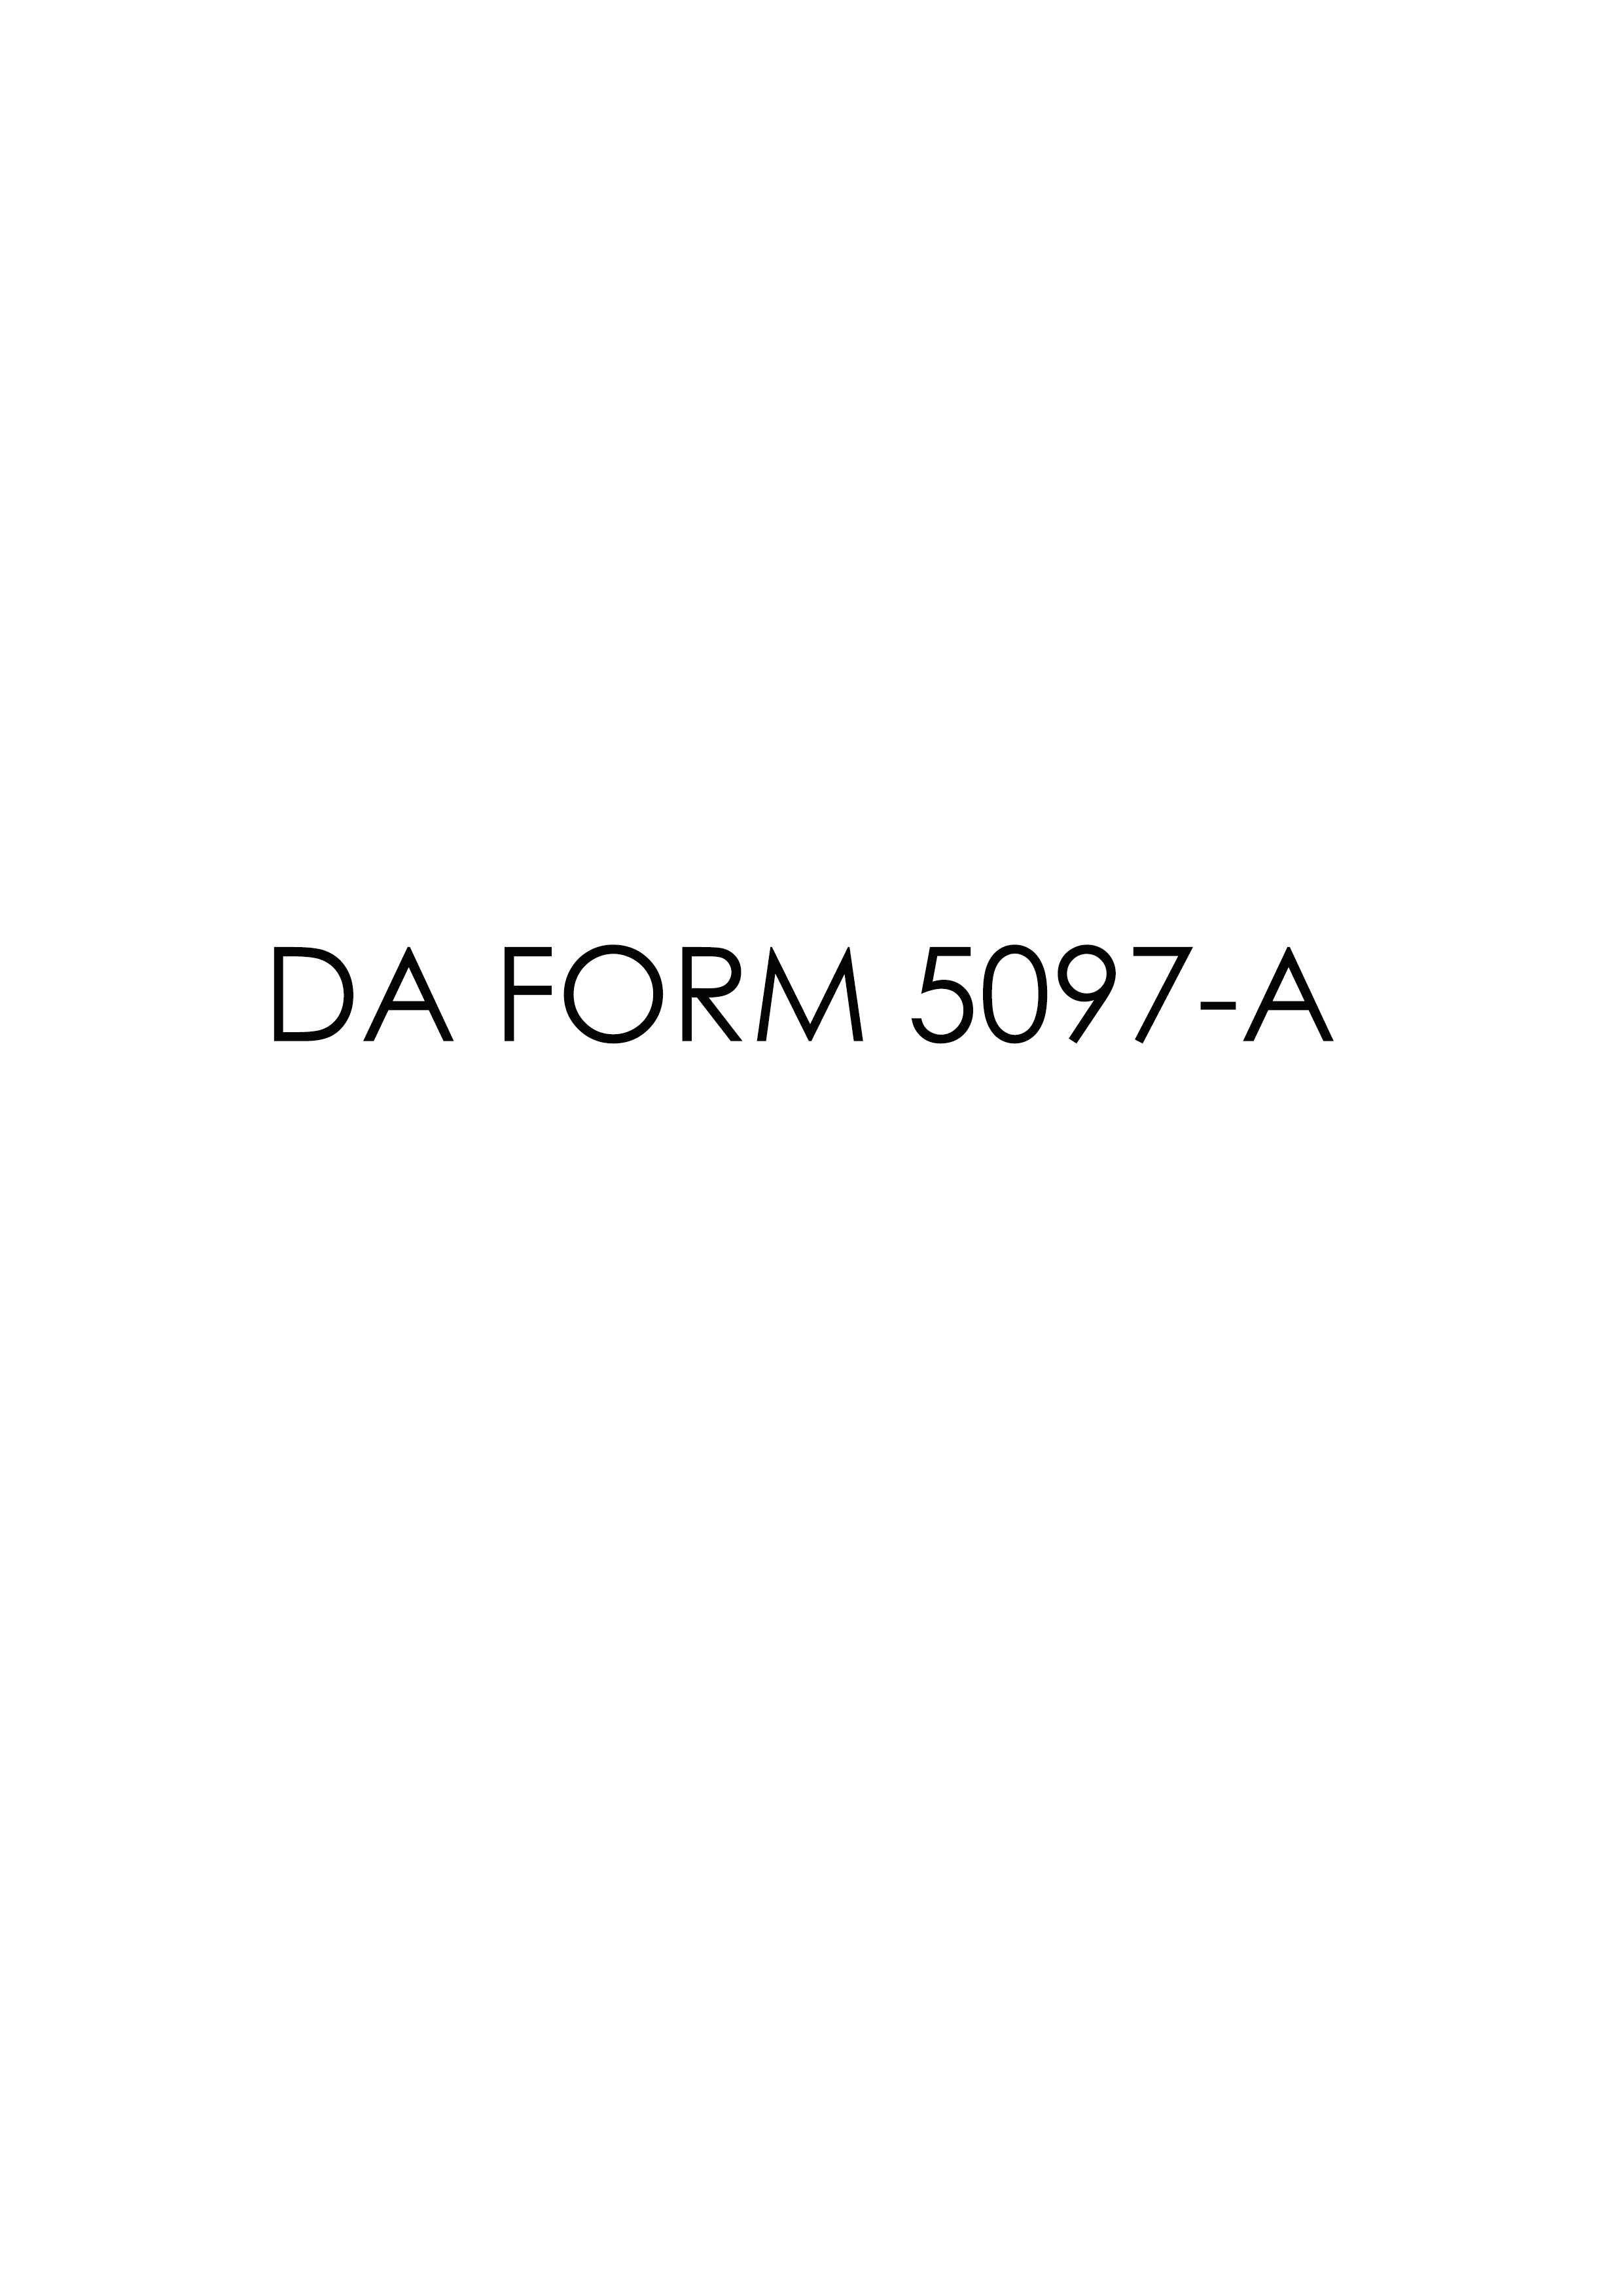 da Form 5097-A fillable